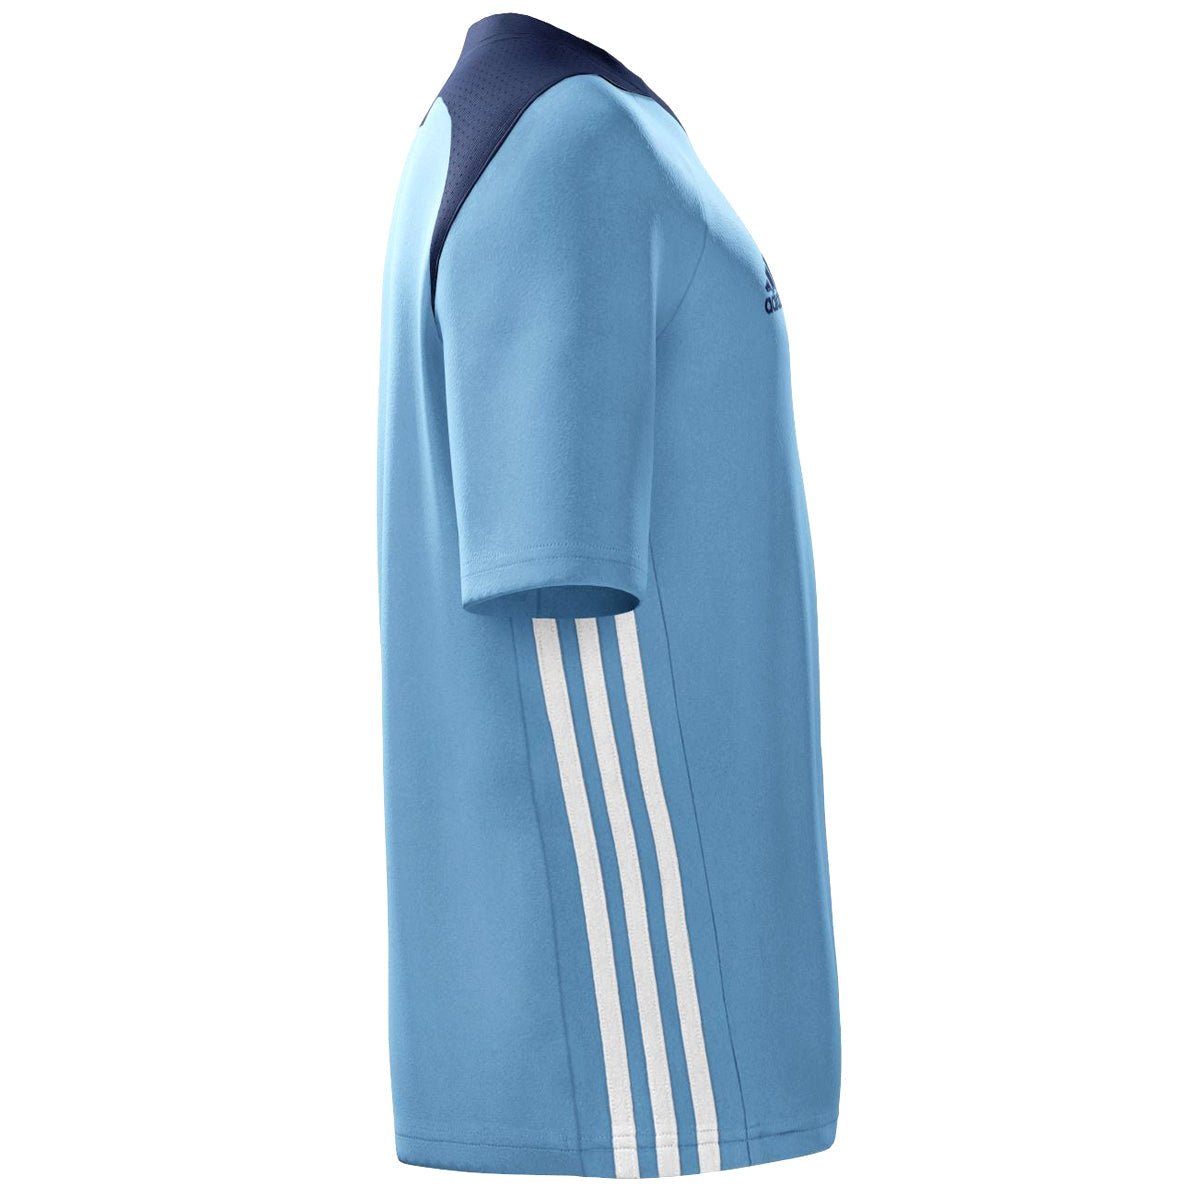 Adidas TIRO 17 | Light Blue Jersey Jersey Adidas 